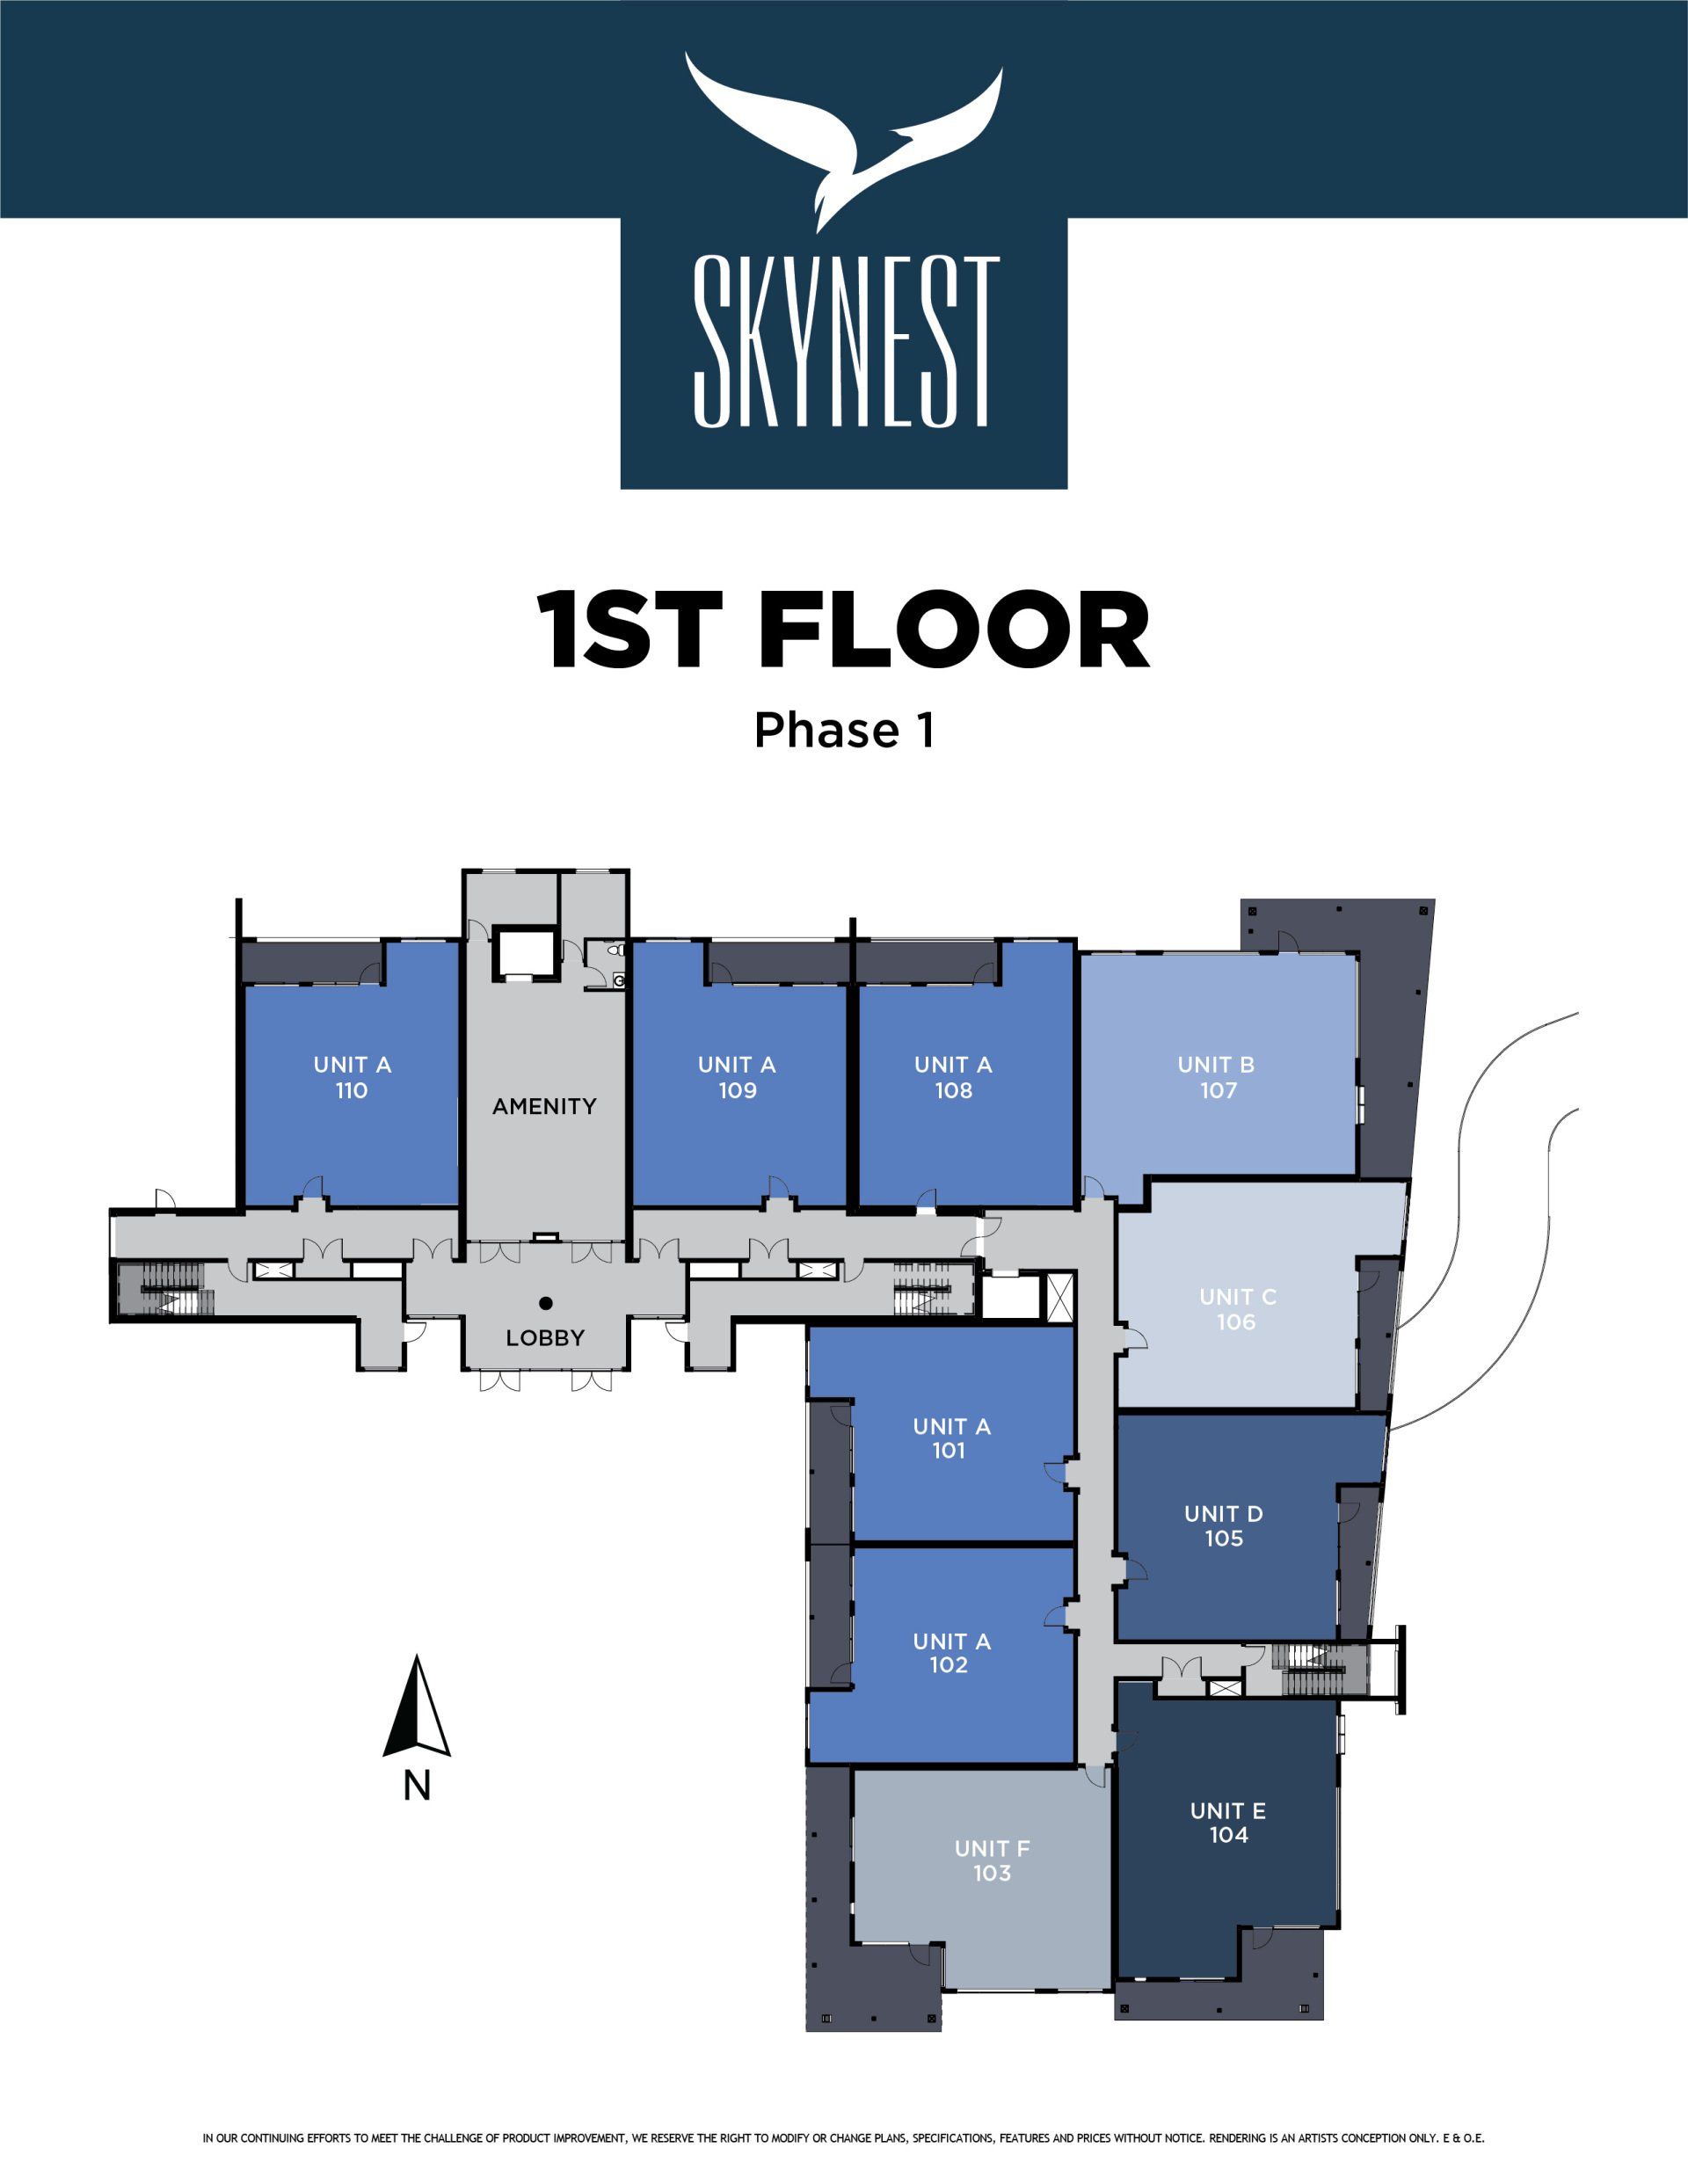 Skynest Condos Floor Site Plan 1st Floor Phase I